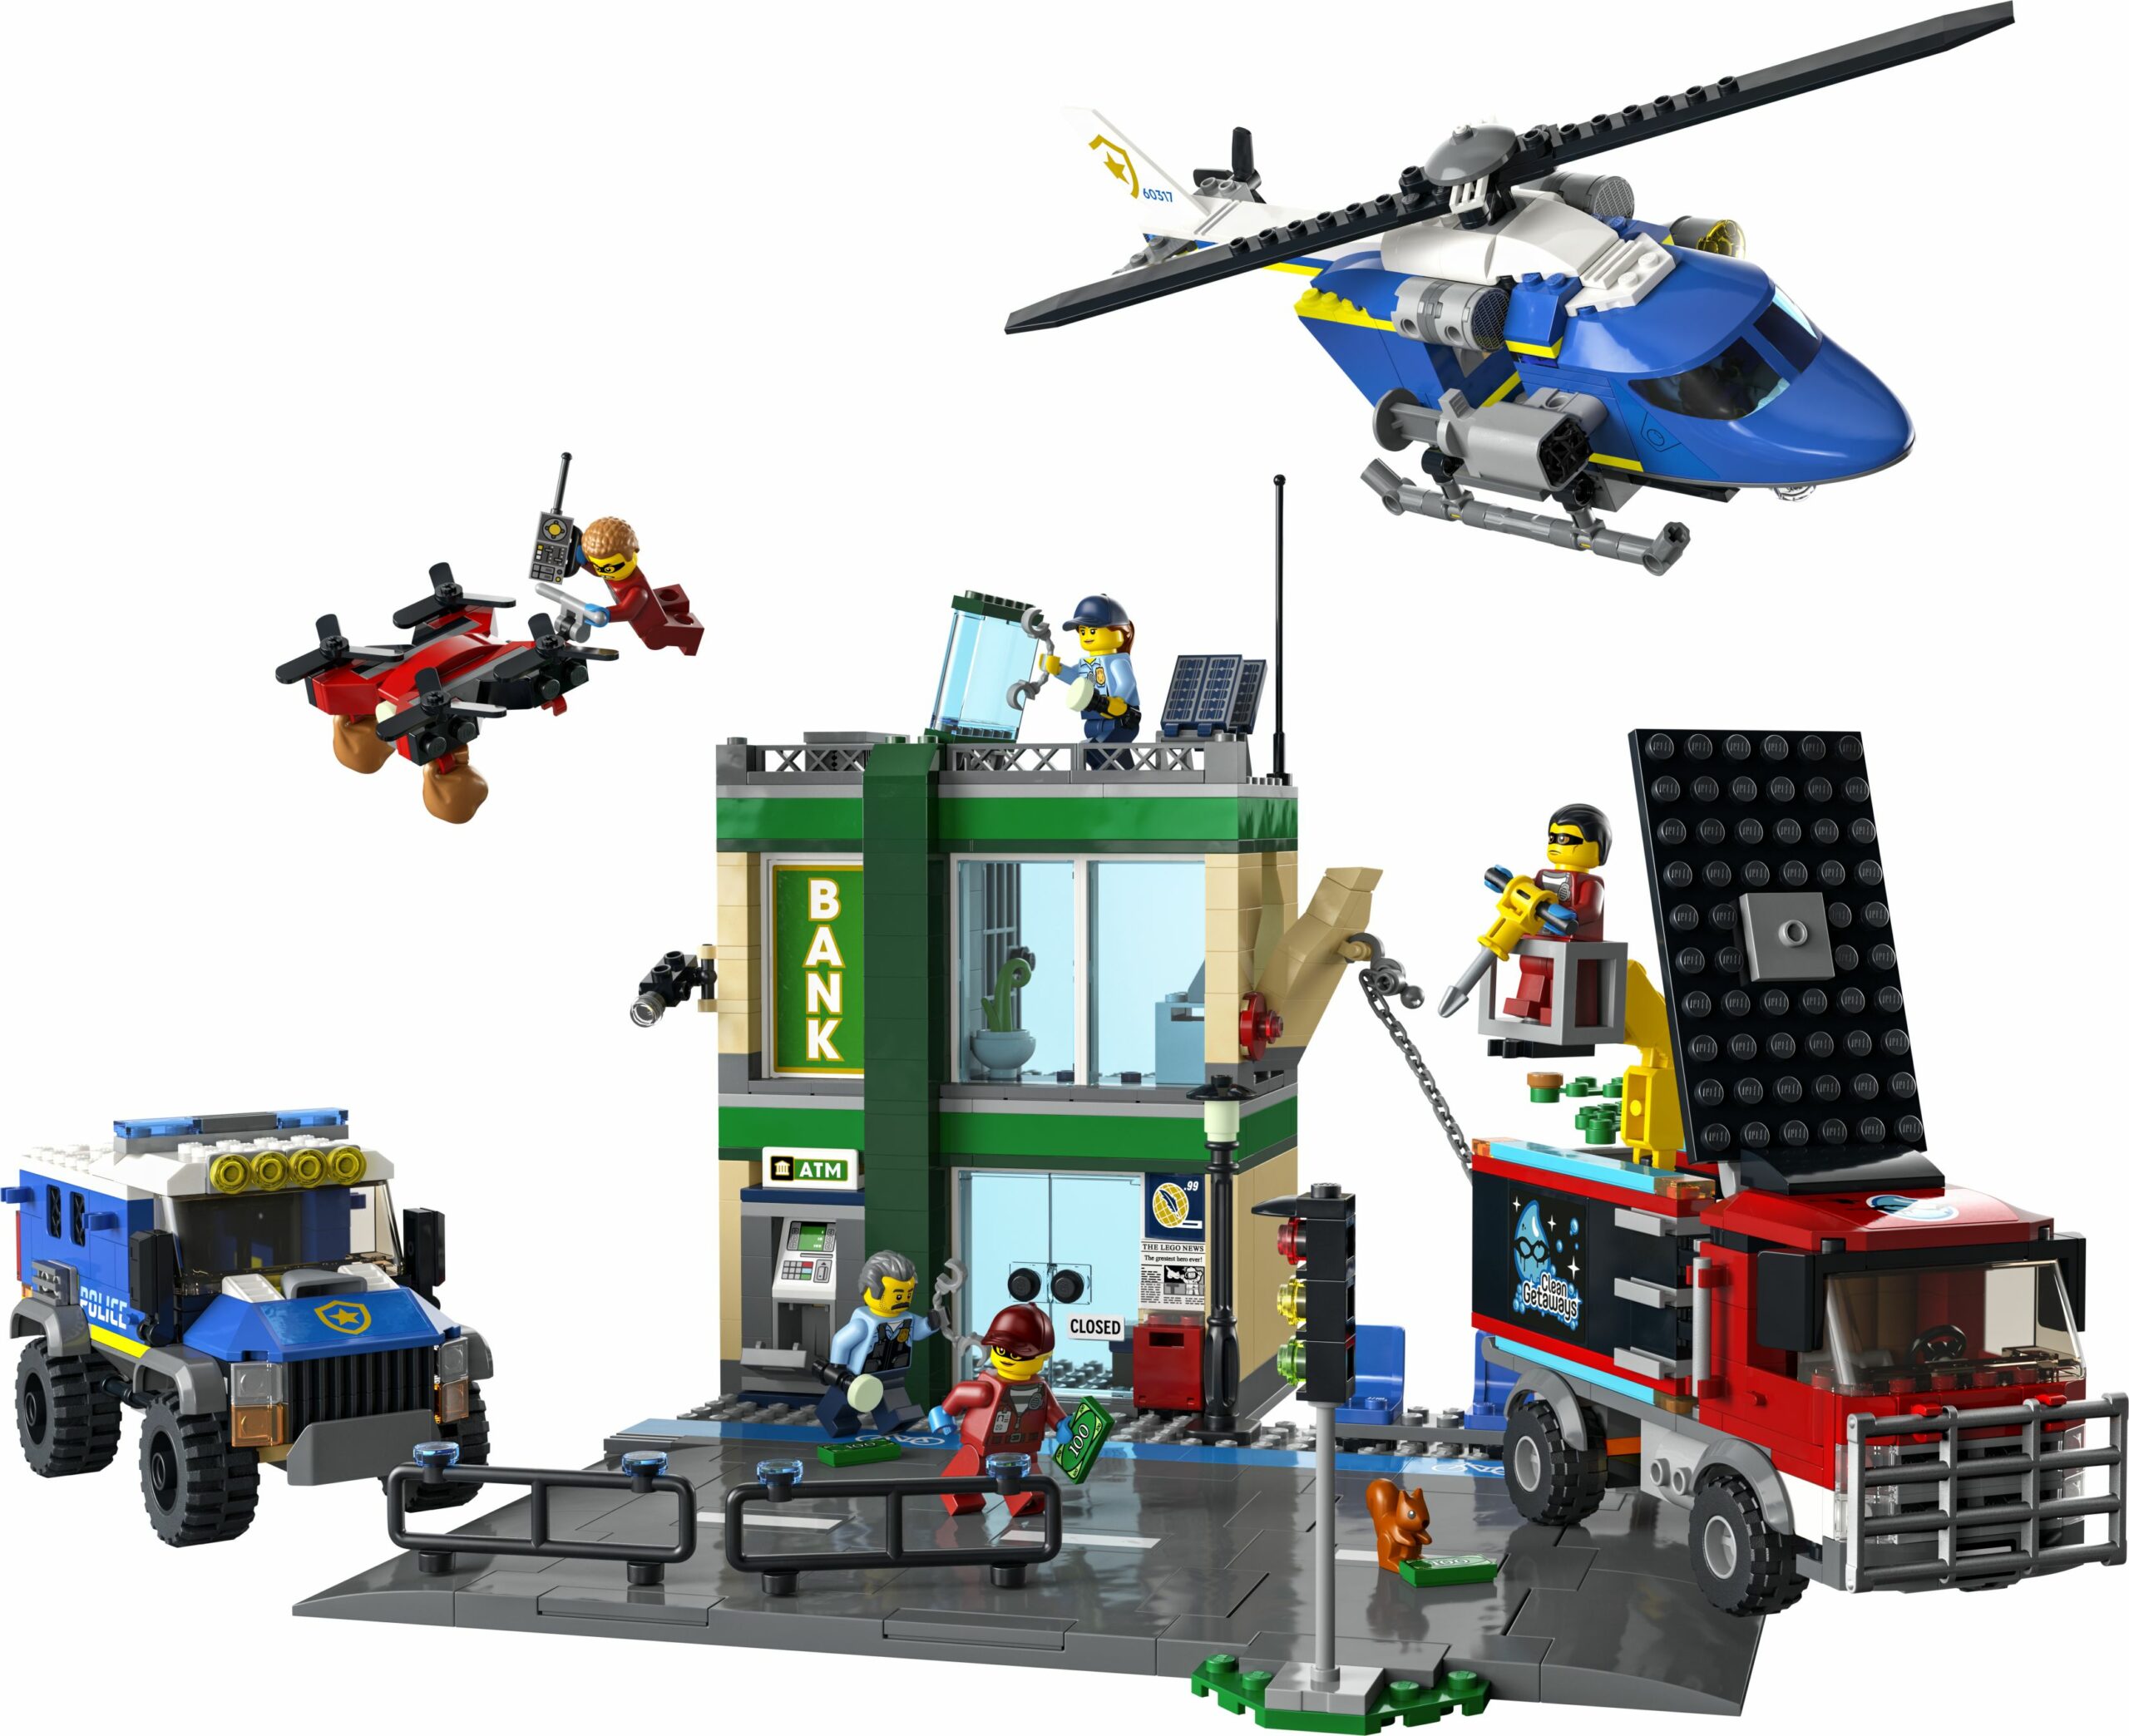 LEGO City - Banküberfall mit Verfolgungsjagd